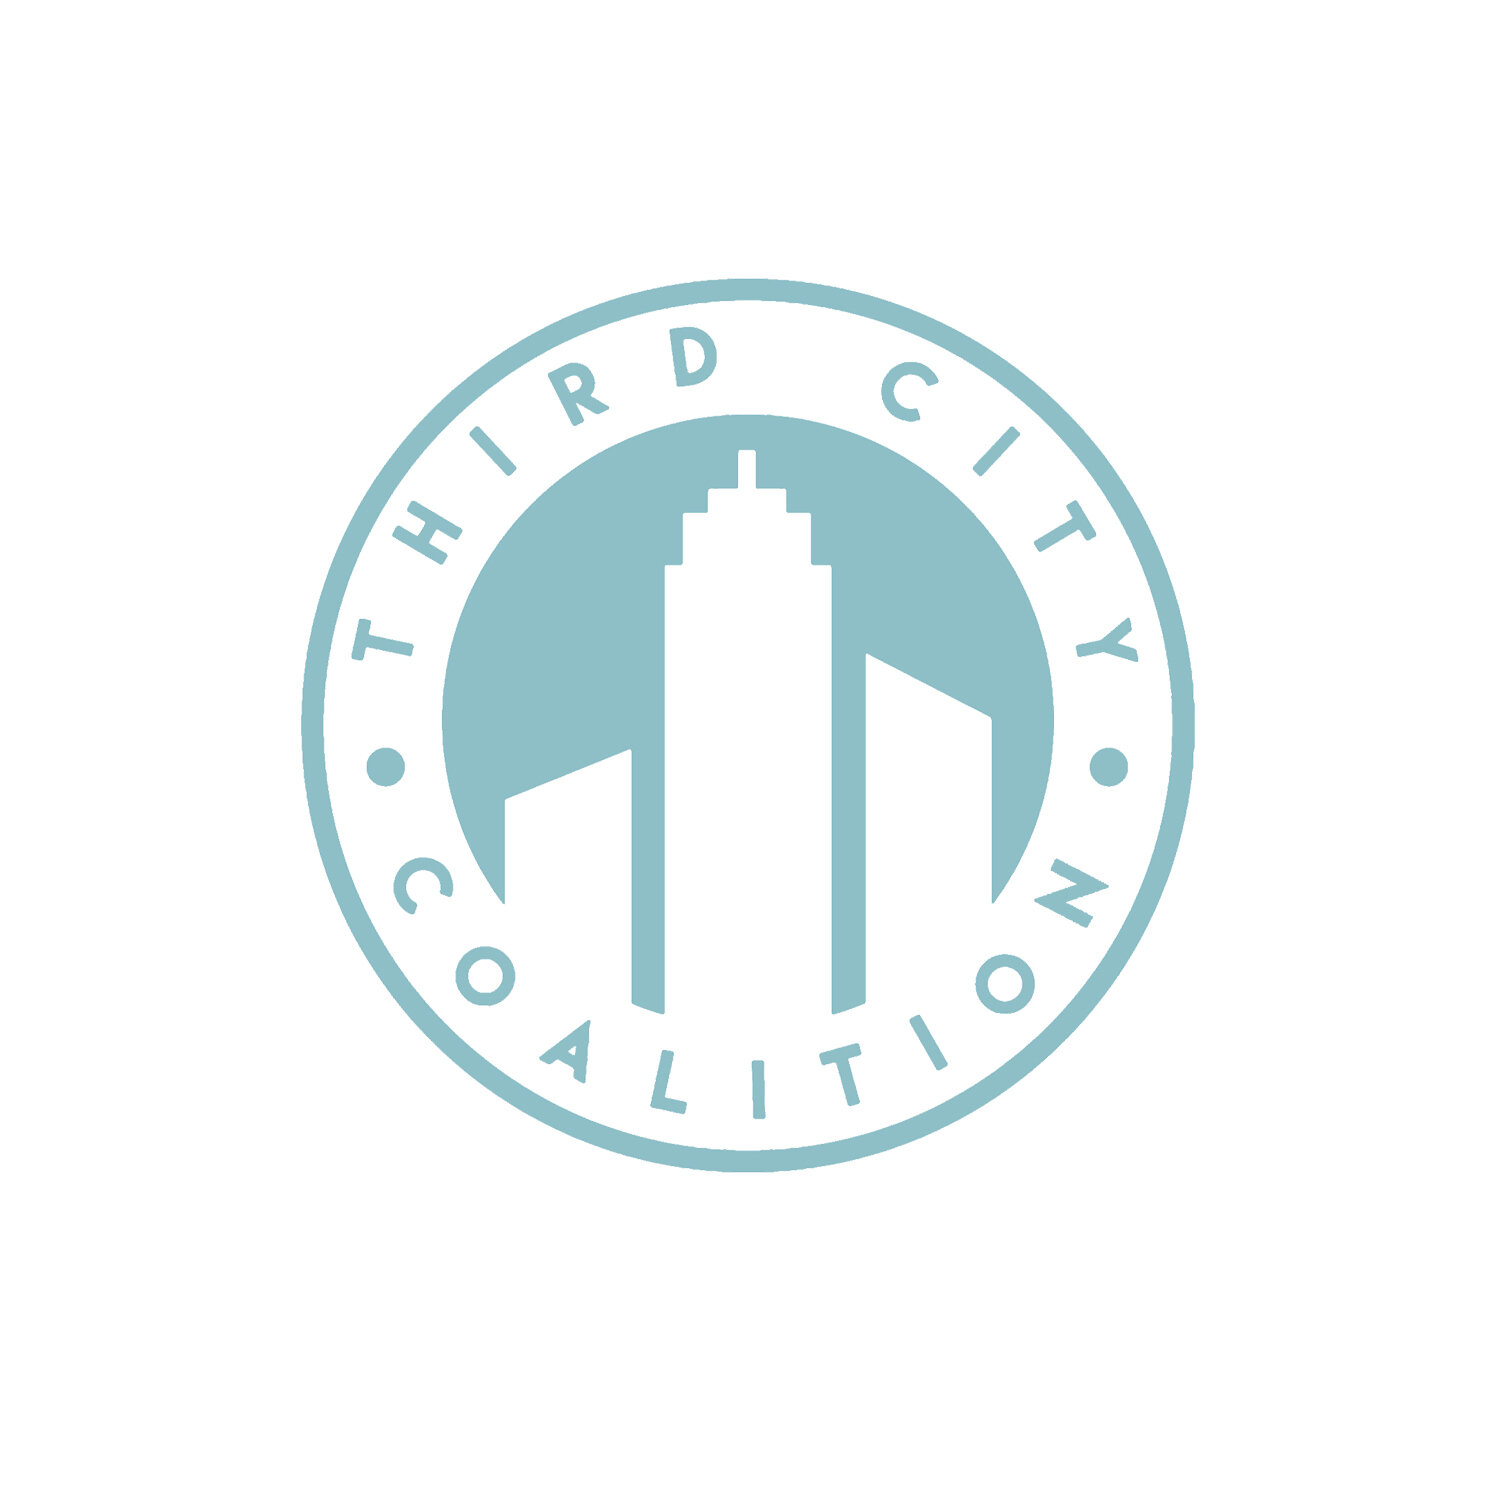 third-city-coalition-logo-1500px.jpg